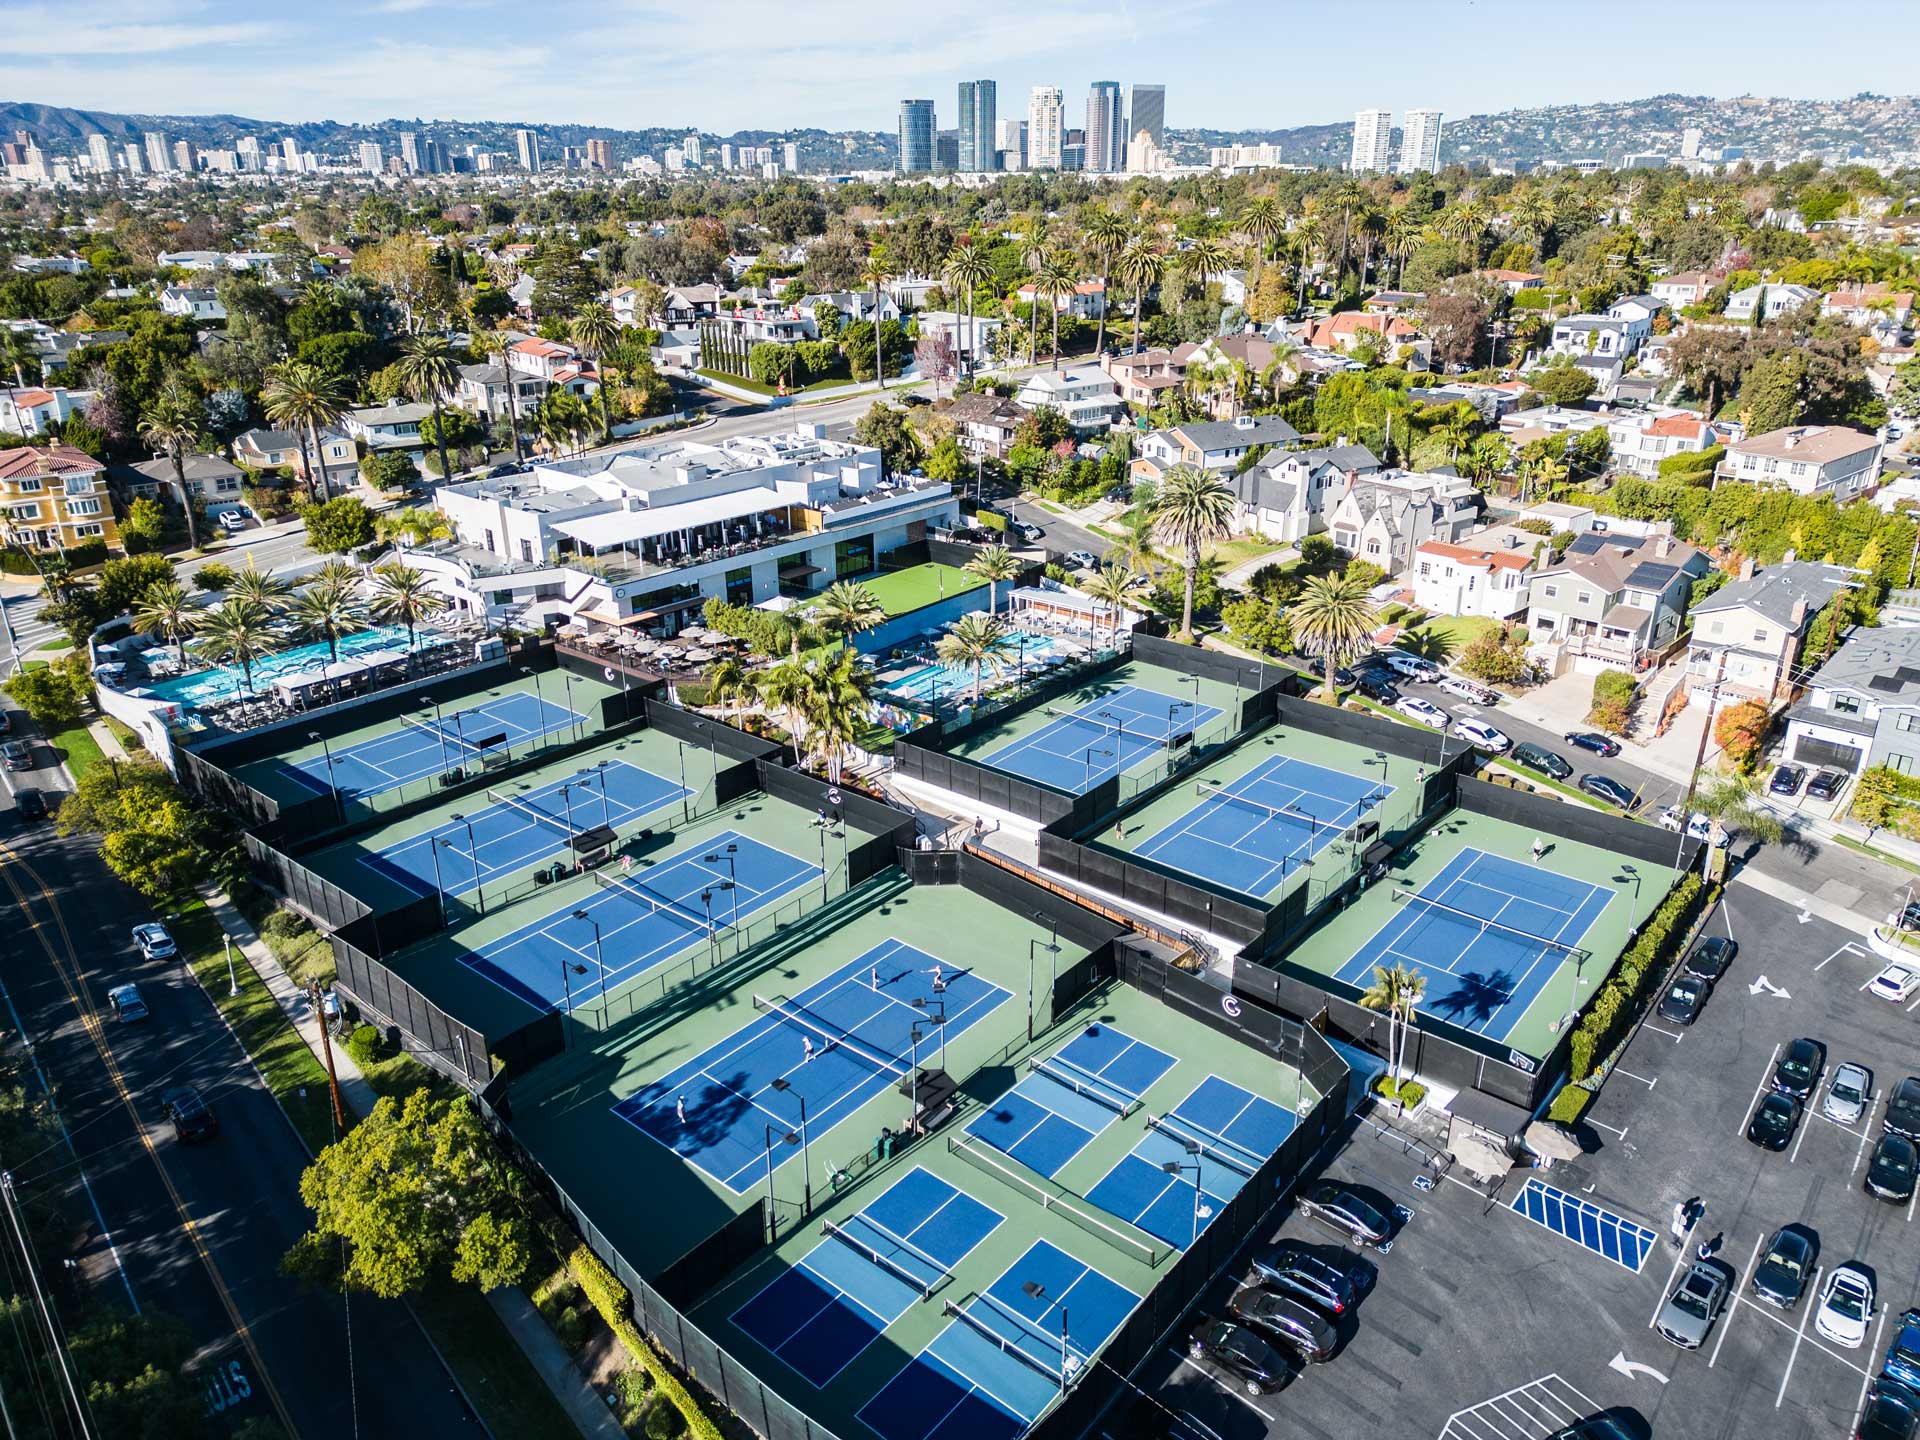 Griffin Club Los Angeles - An LA Tennis, Social, Members Club & Gym